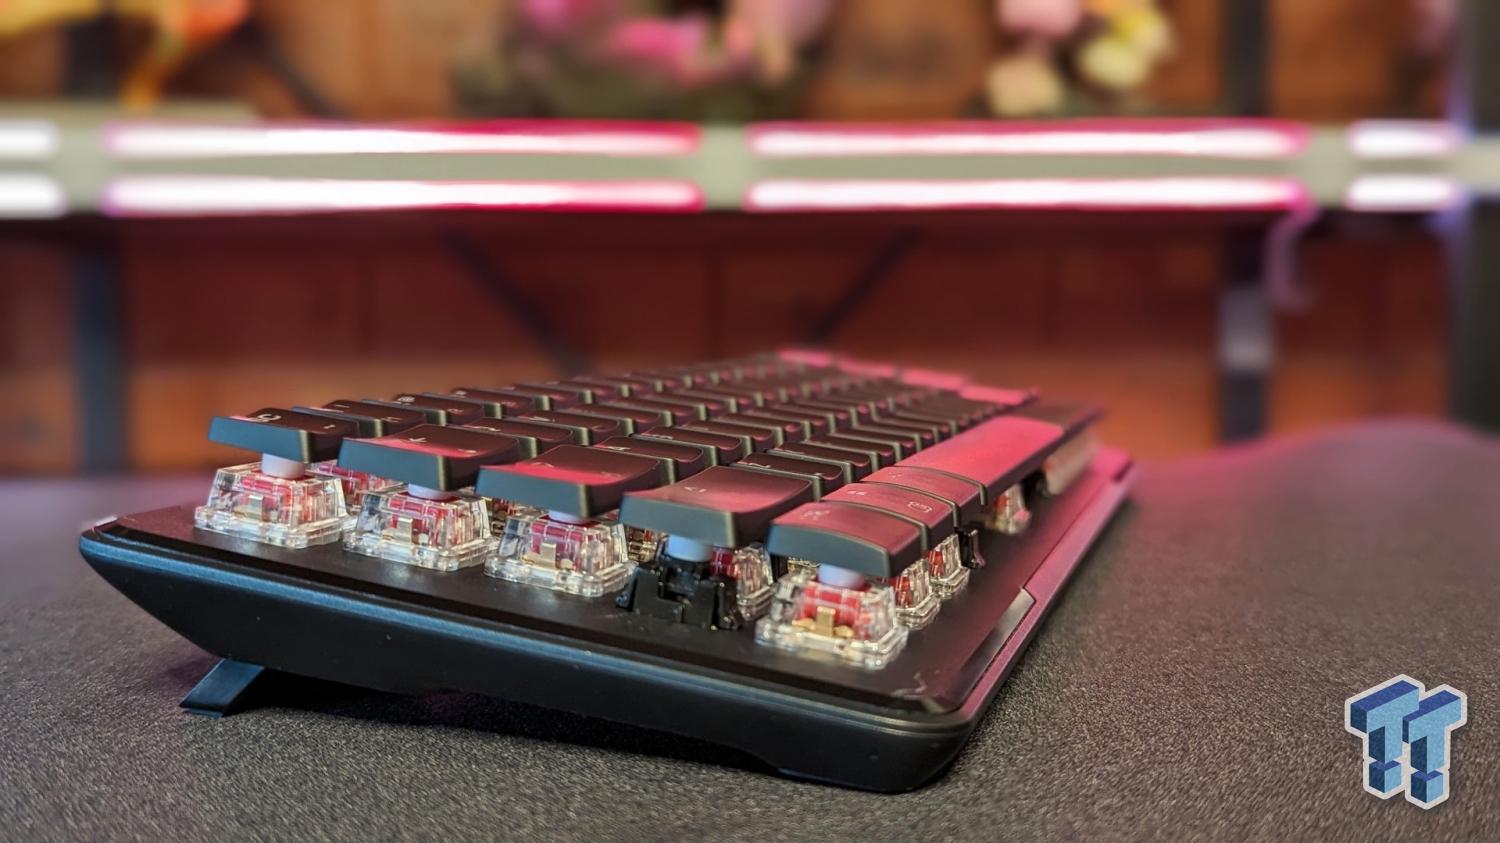 Vulcan II Mini Keyboard Review - Packs a Powerful, Compact Punch